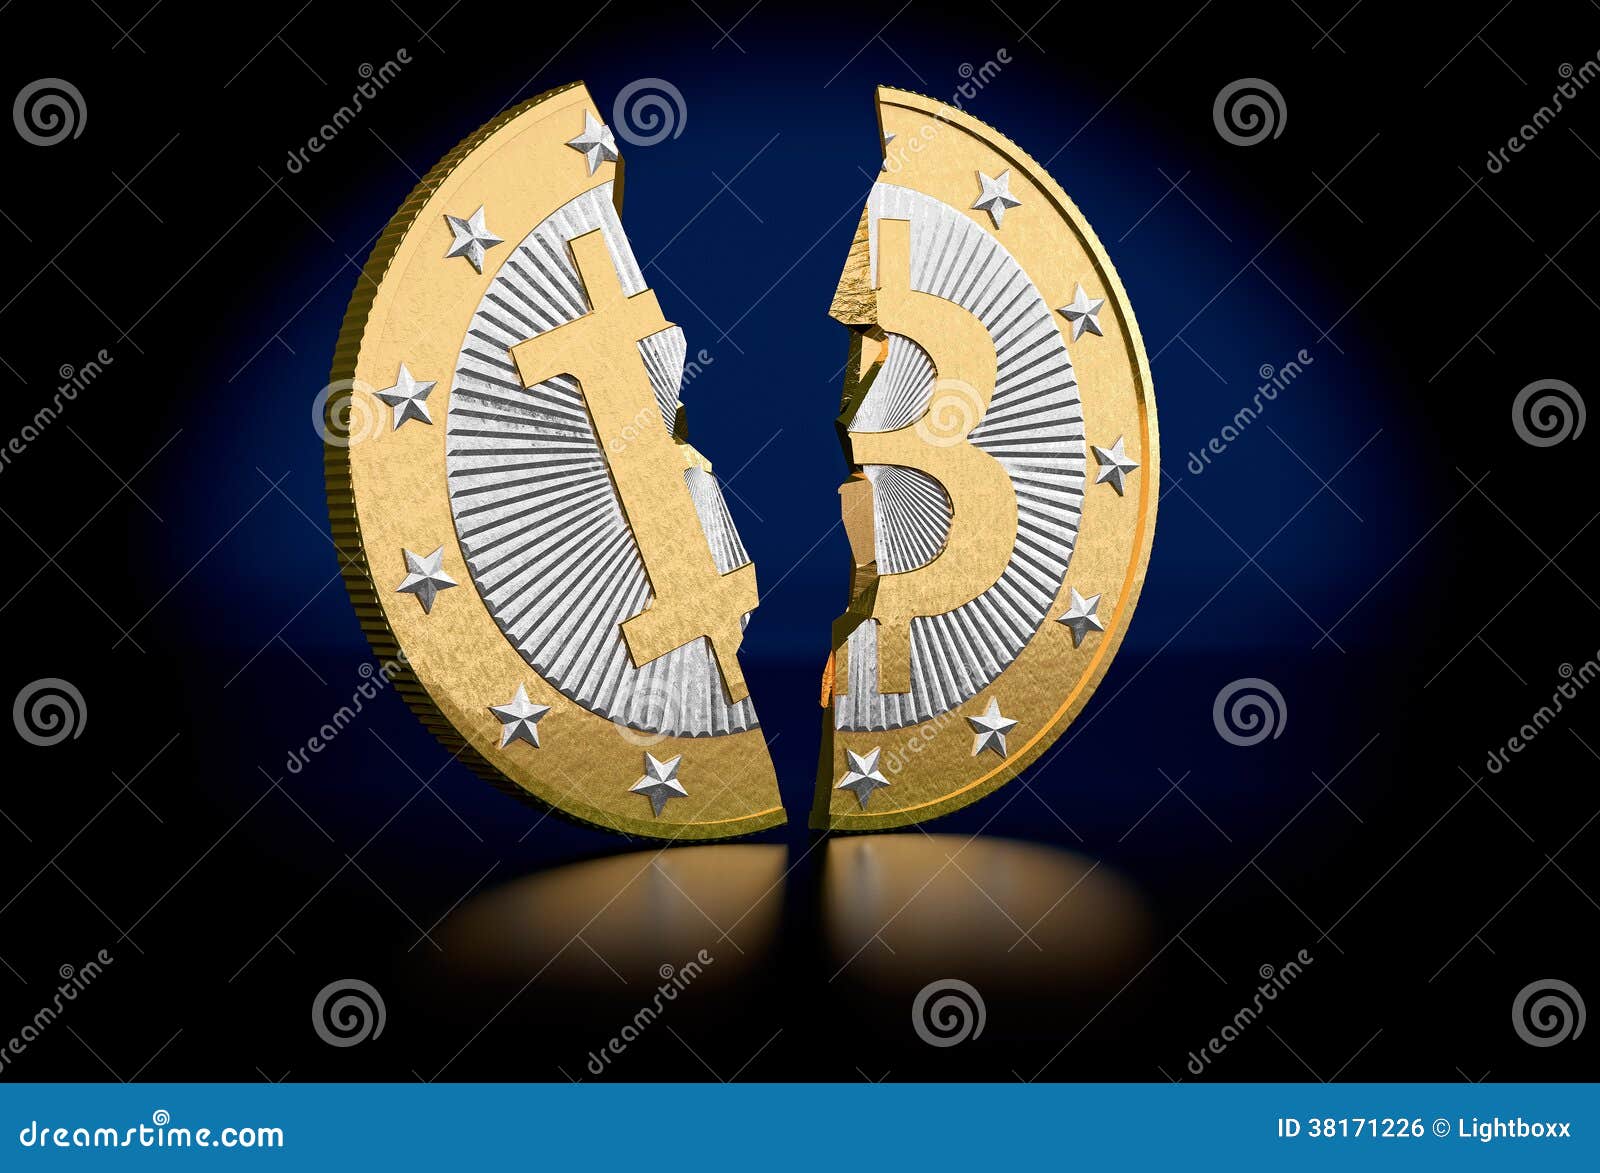 when will bitcoin split again